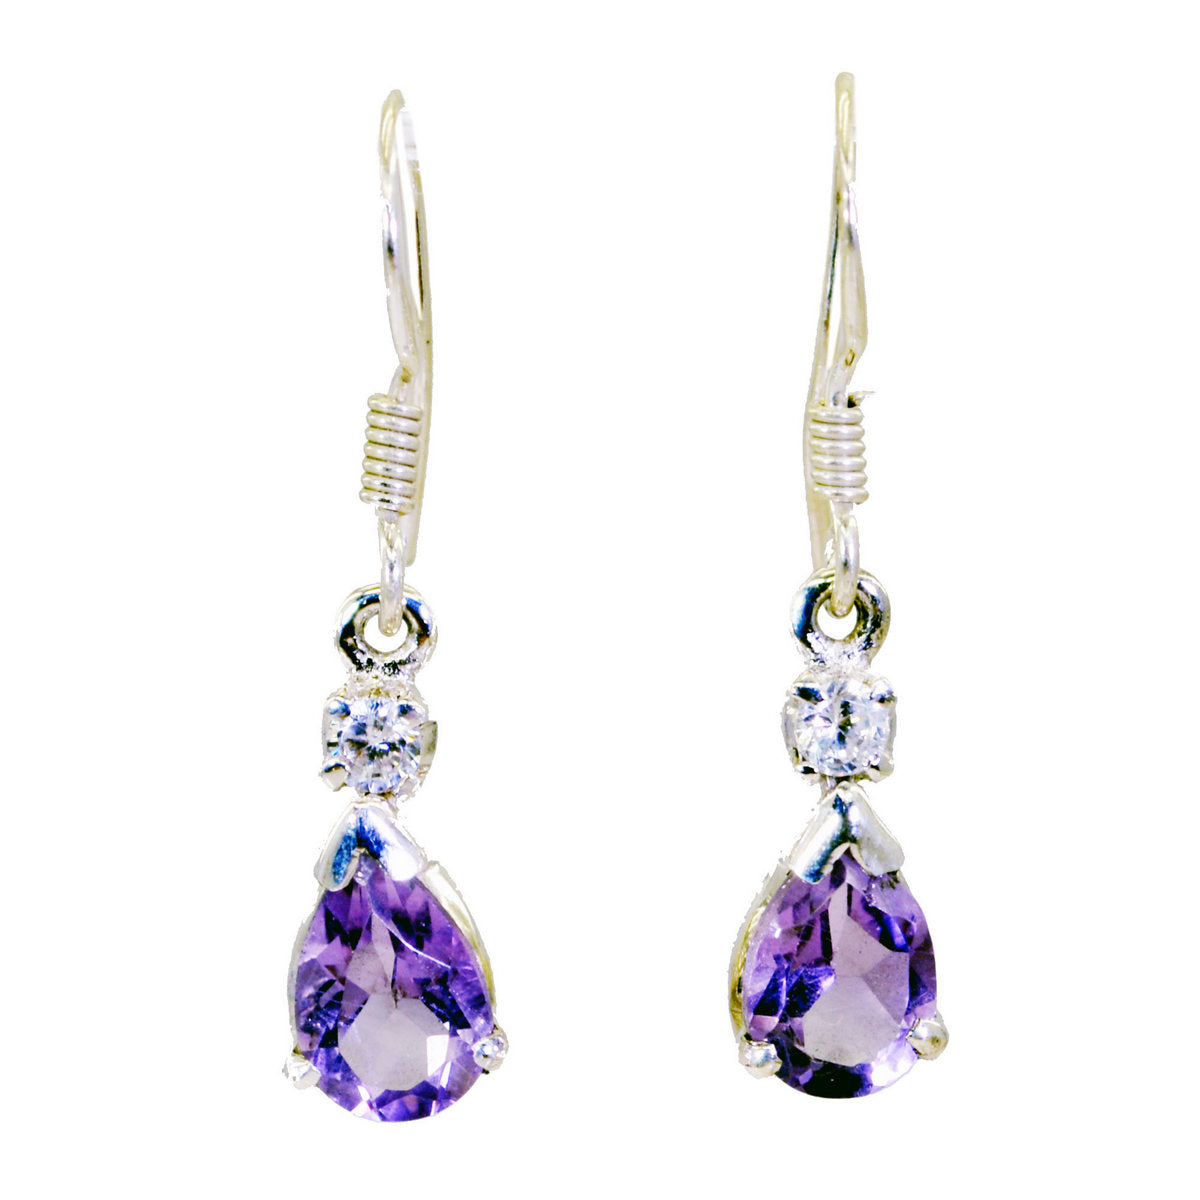 Riyo Good Gemstones multi shape Faceted Purple Amethyst Silver Earrings gift for friendship day